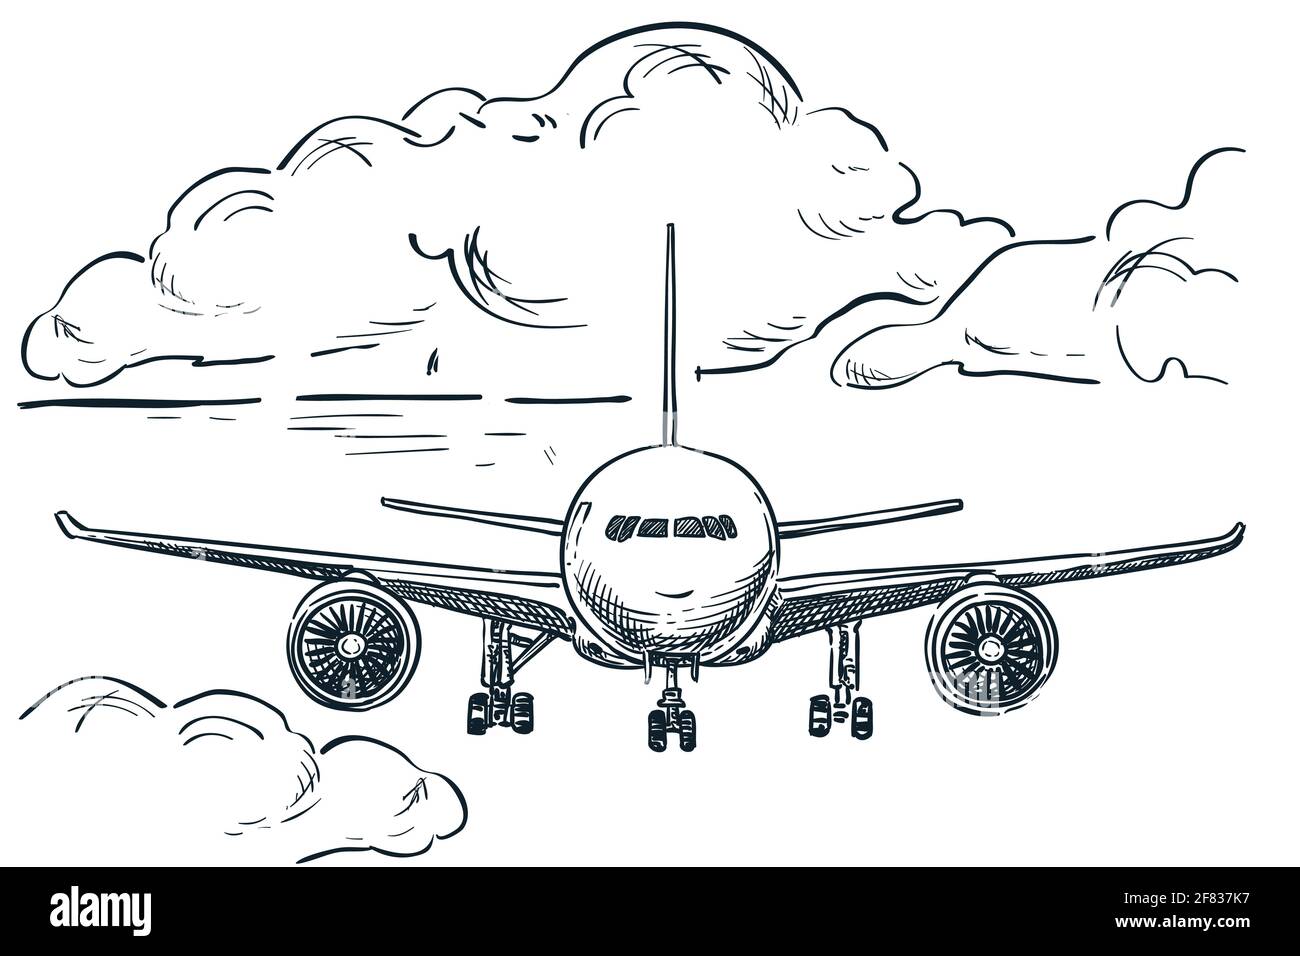 Plane sketches  Airplane sketch Airplane art Art drawings simple